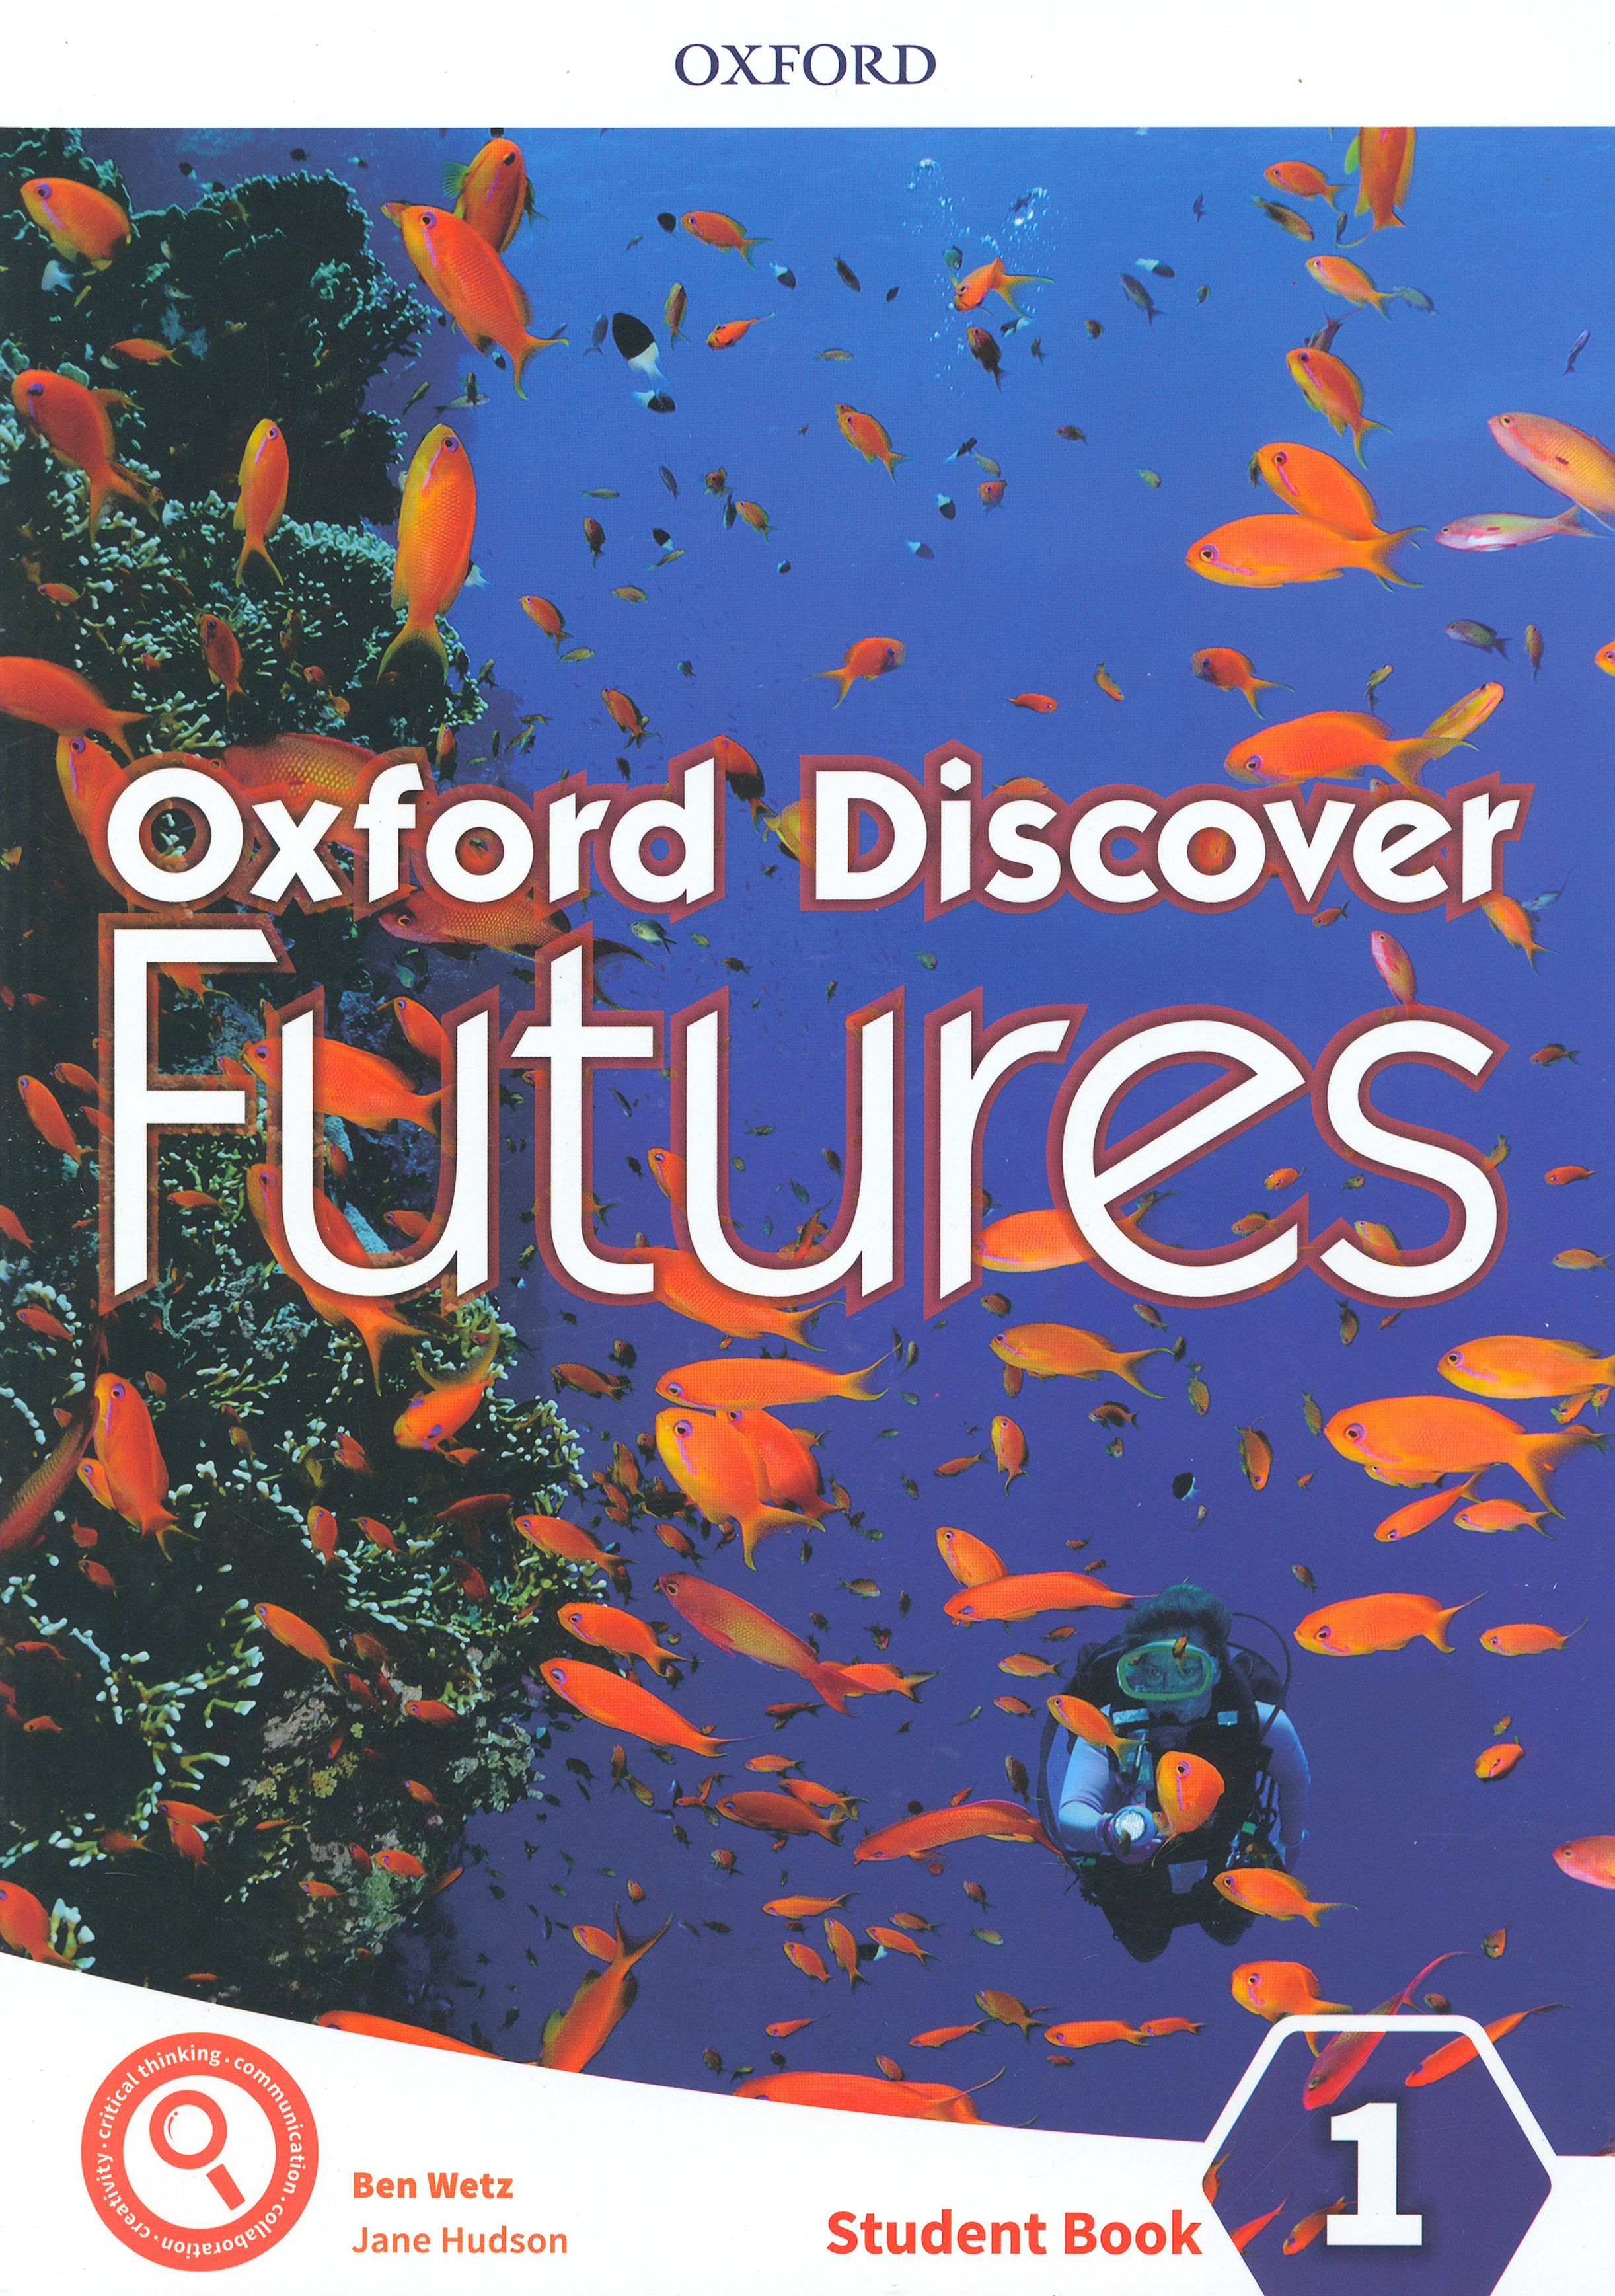 Oxford discover book. Oxford discover Futures 1. Oxford discover Futures. Oxford Discovery 1. Книга Oxford.